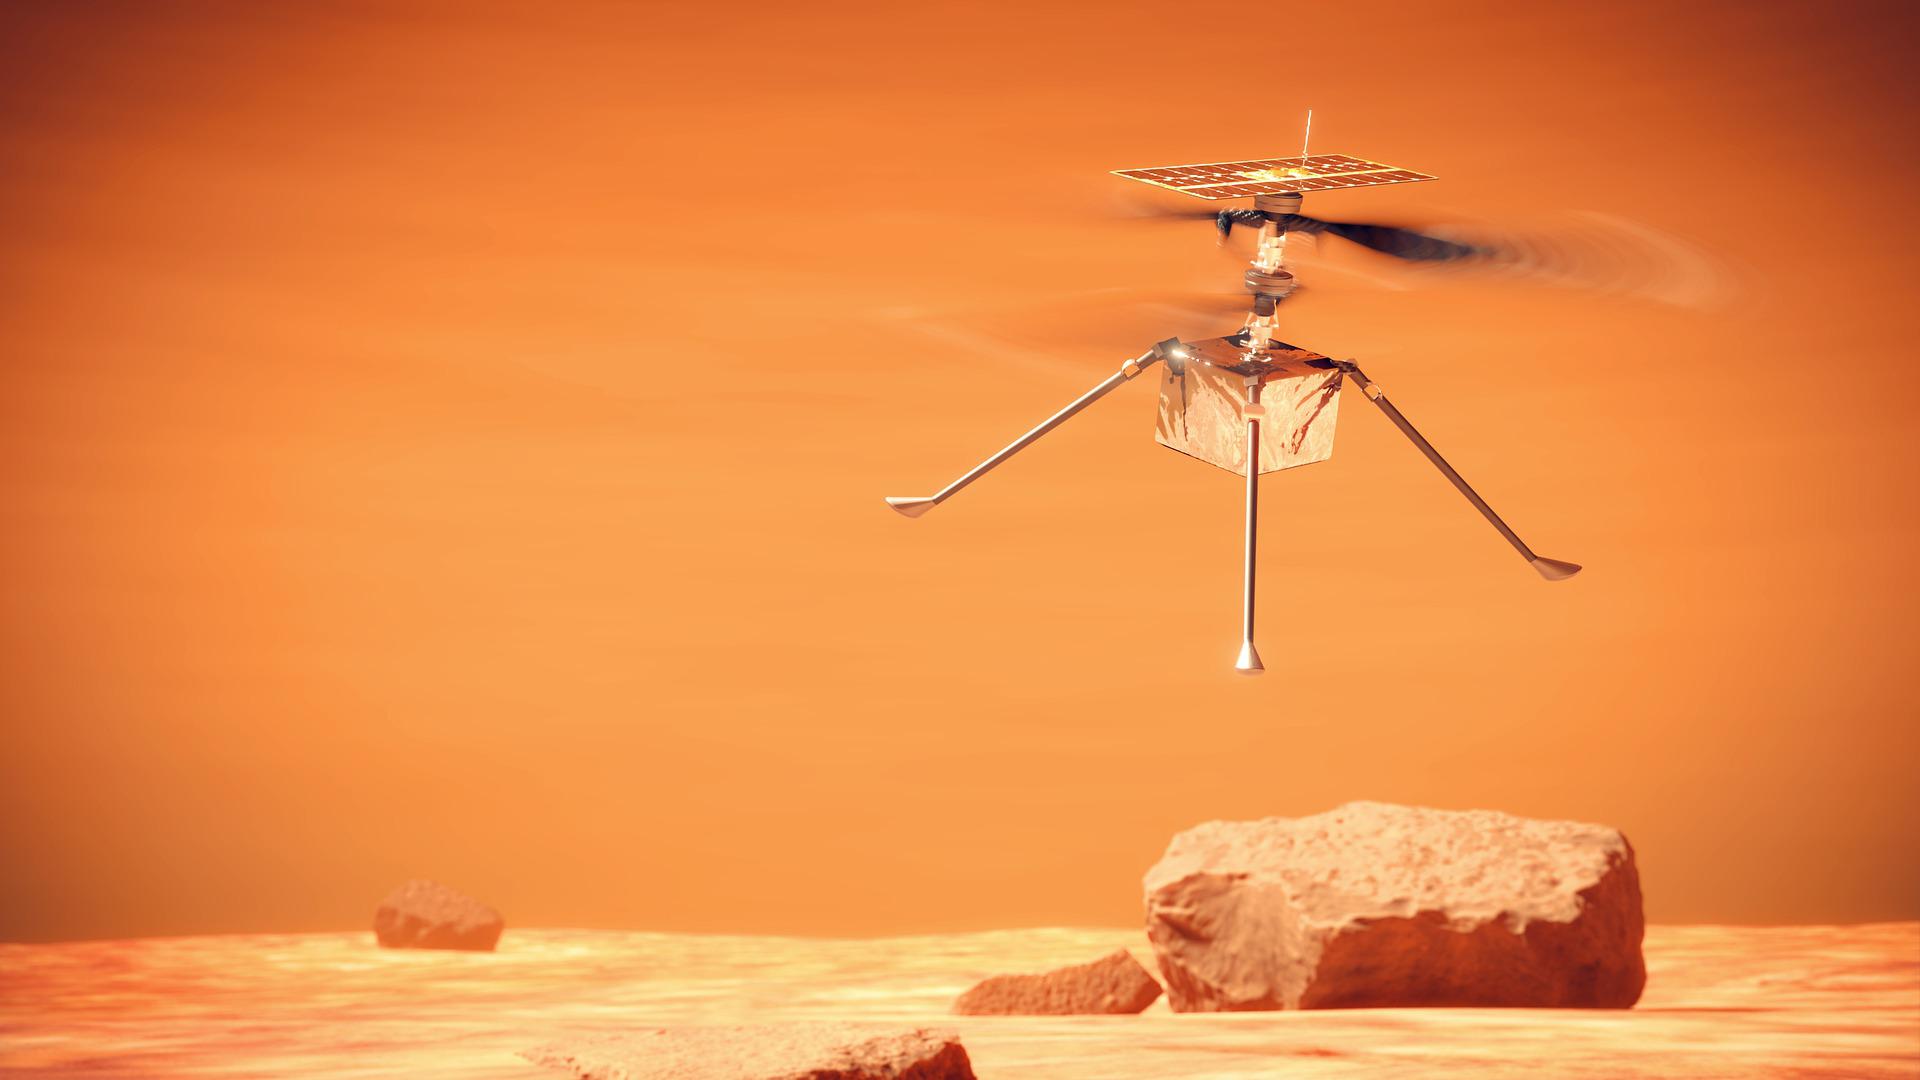 NASA Video Shows Ingenuity Mars Helicopter on Unprecedented Bold Flight